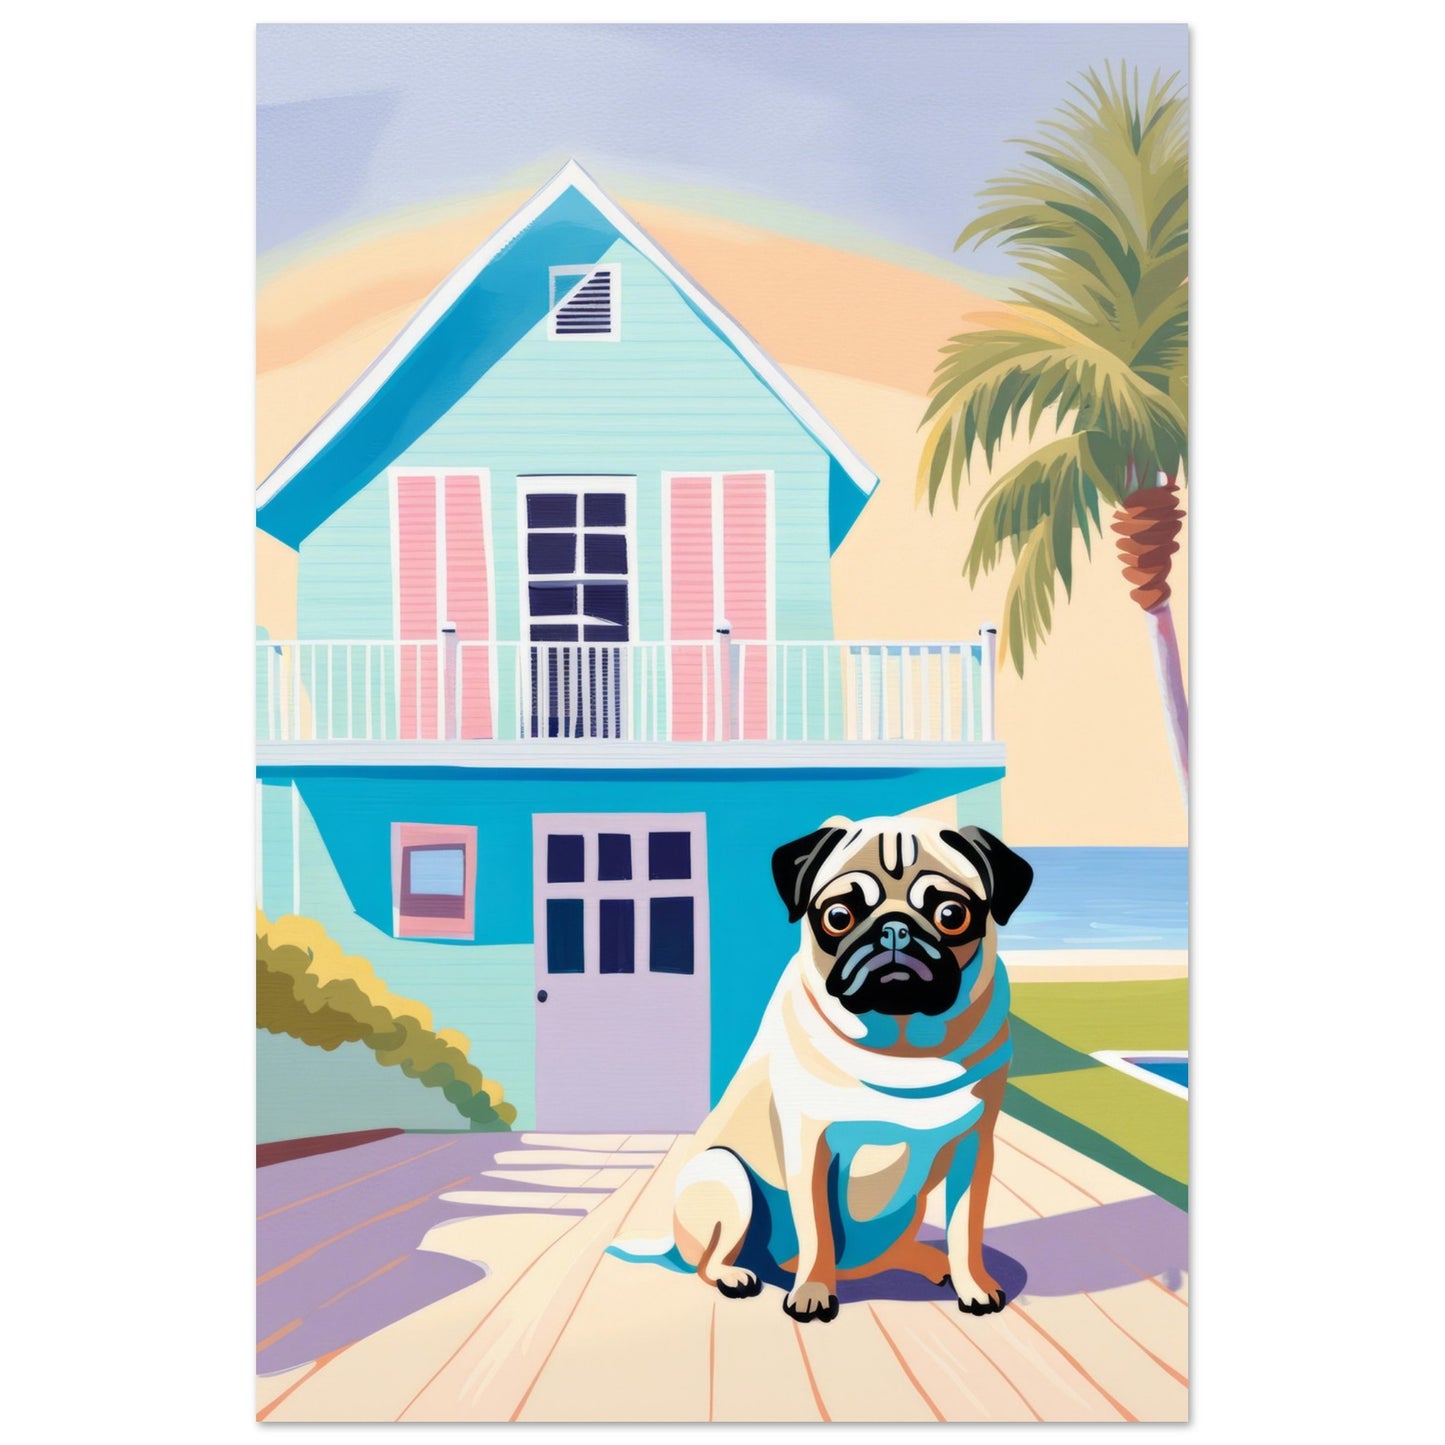 House Guard - Minimalist Wall Art Print Pug Dog